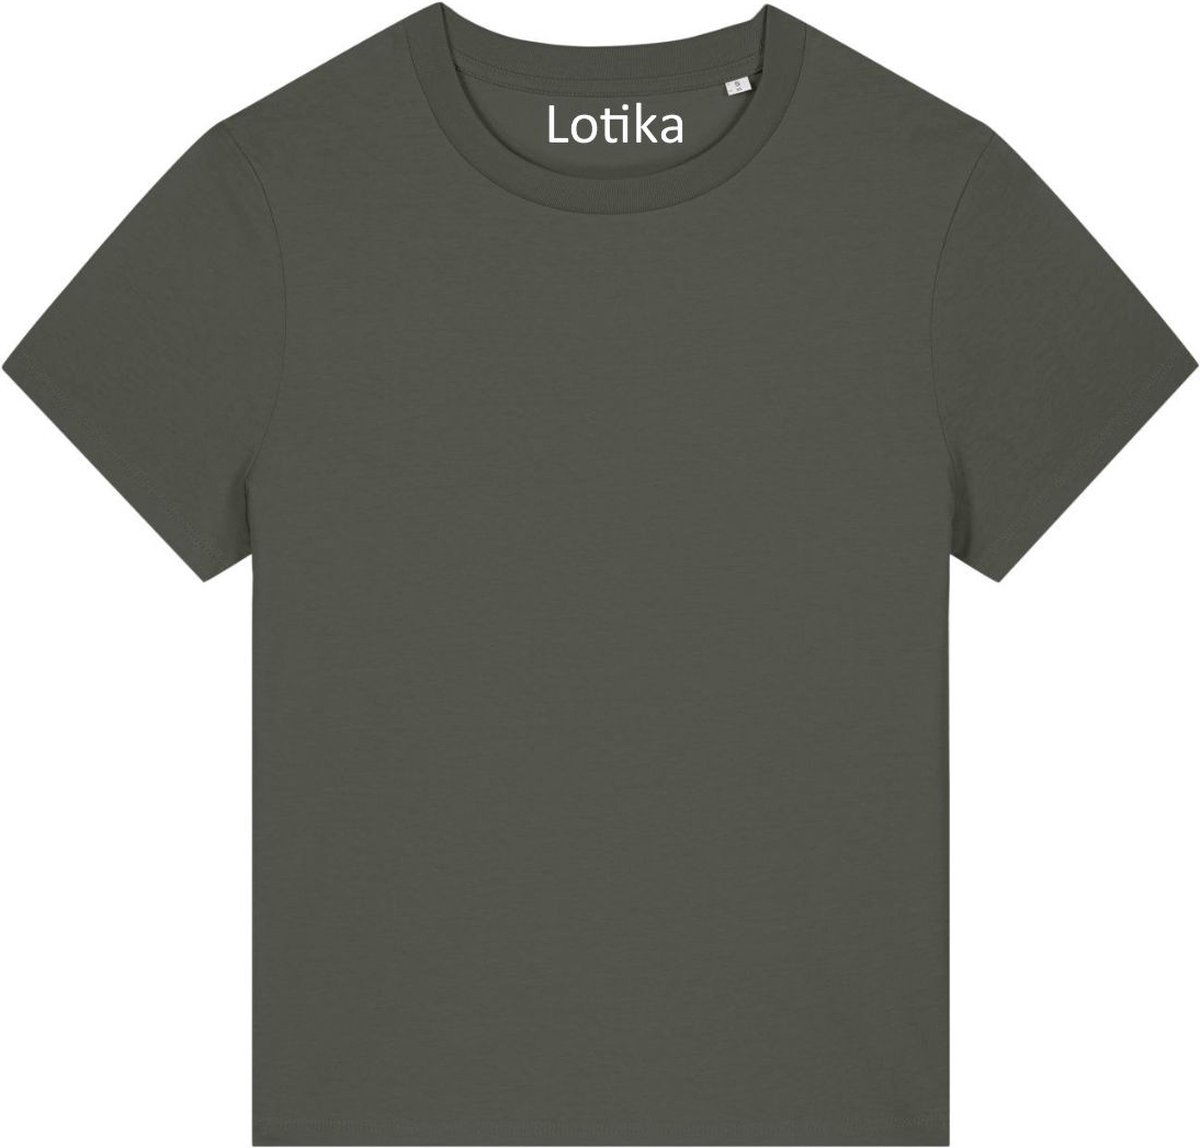 Lotika - Saar T-shirt dames biologisch katoen - kaki